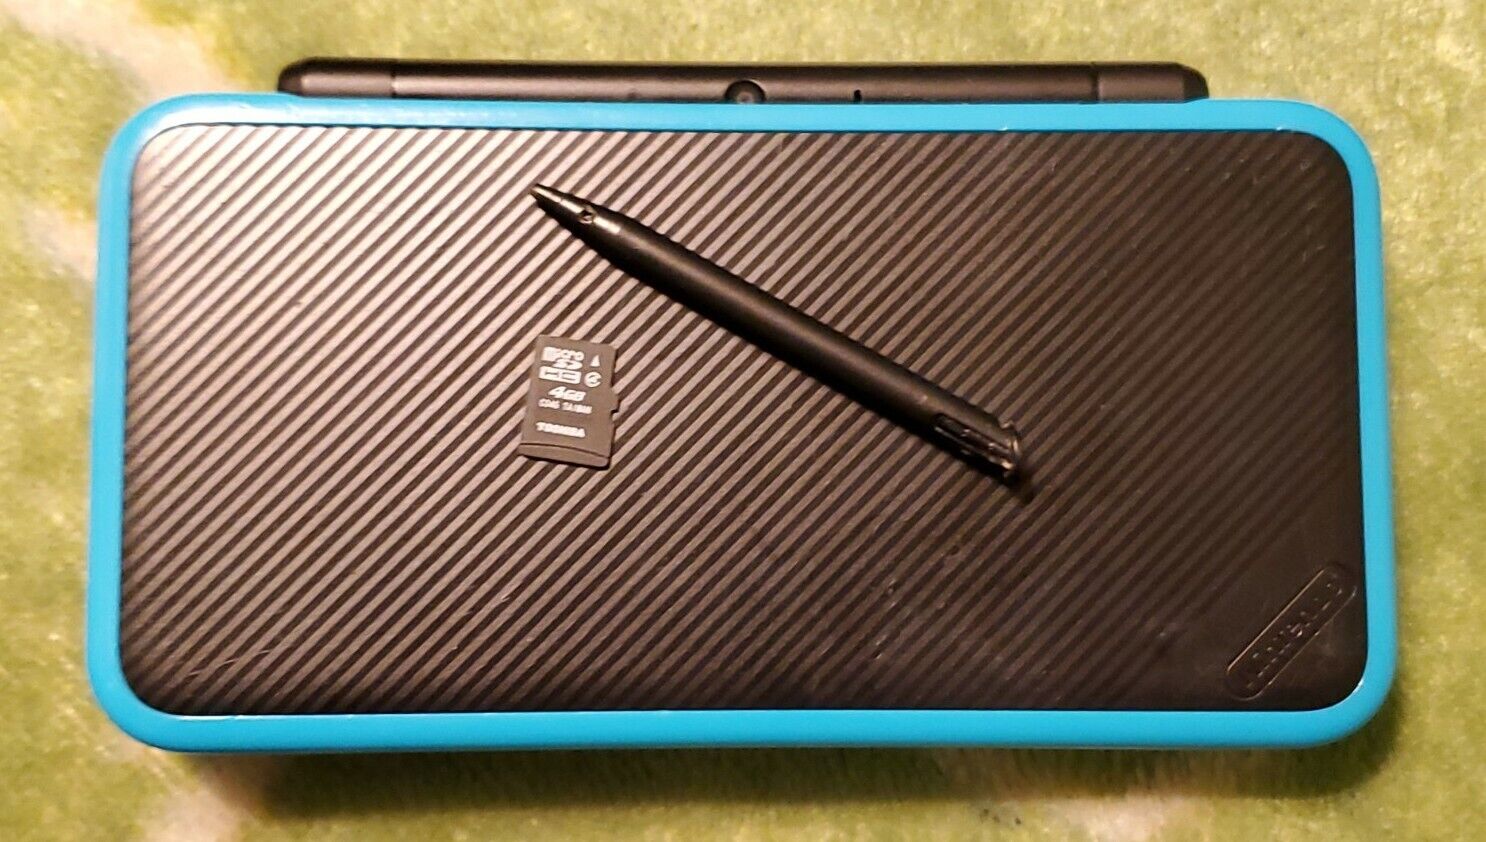 Nintendo 2DS XL Black/Turquoise Handheld System